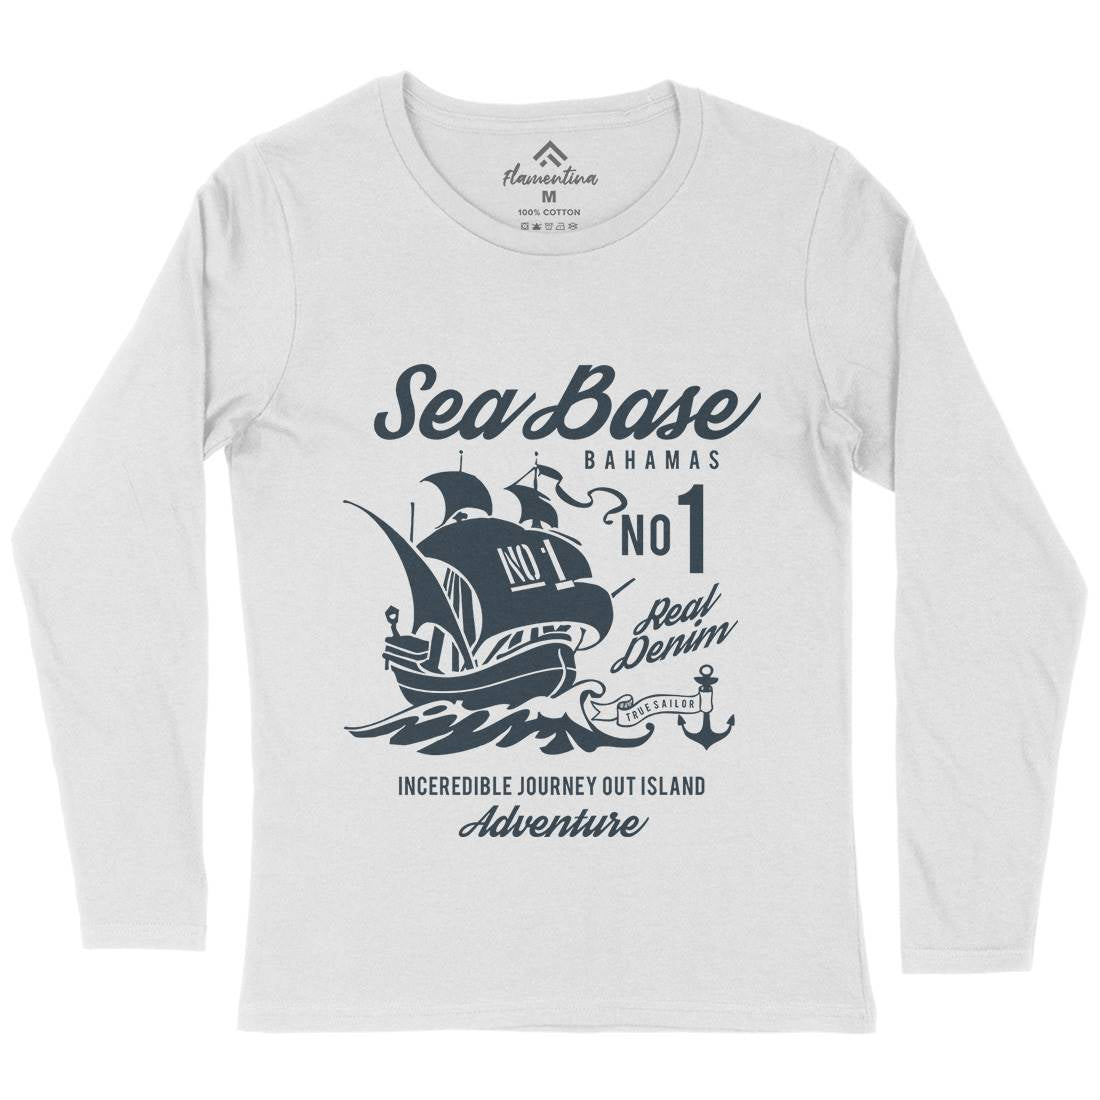 Sea Base Womens Long Sleeve T-Shirt Navy B252